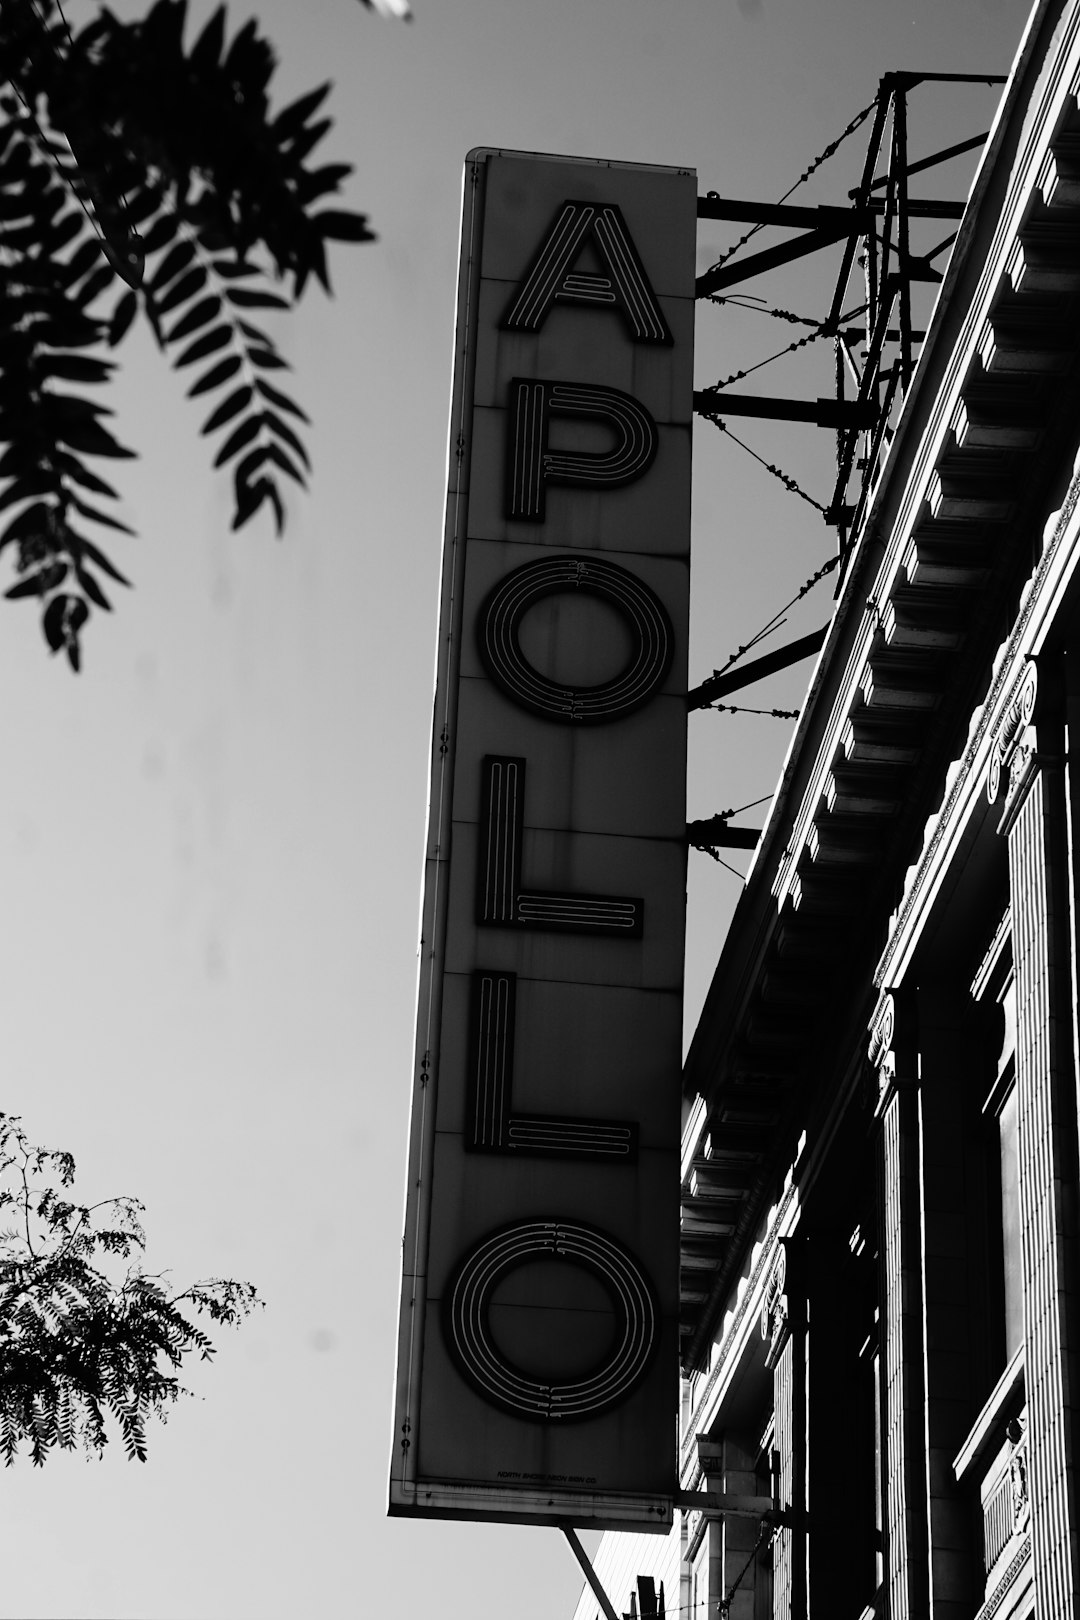 Apollo neon signage on wall